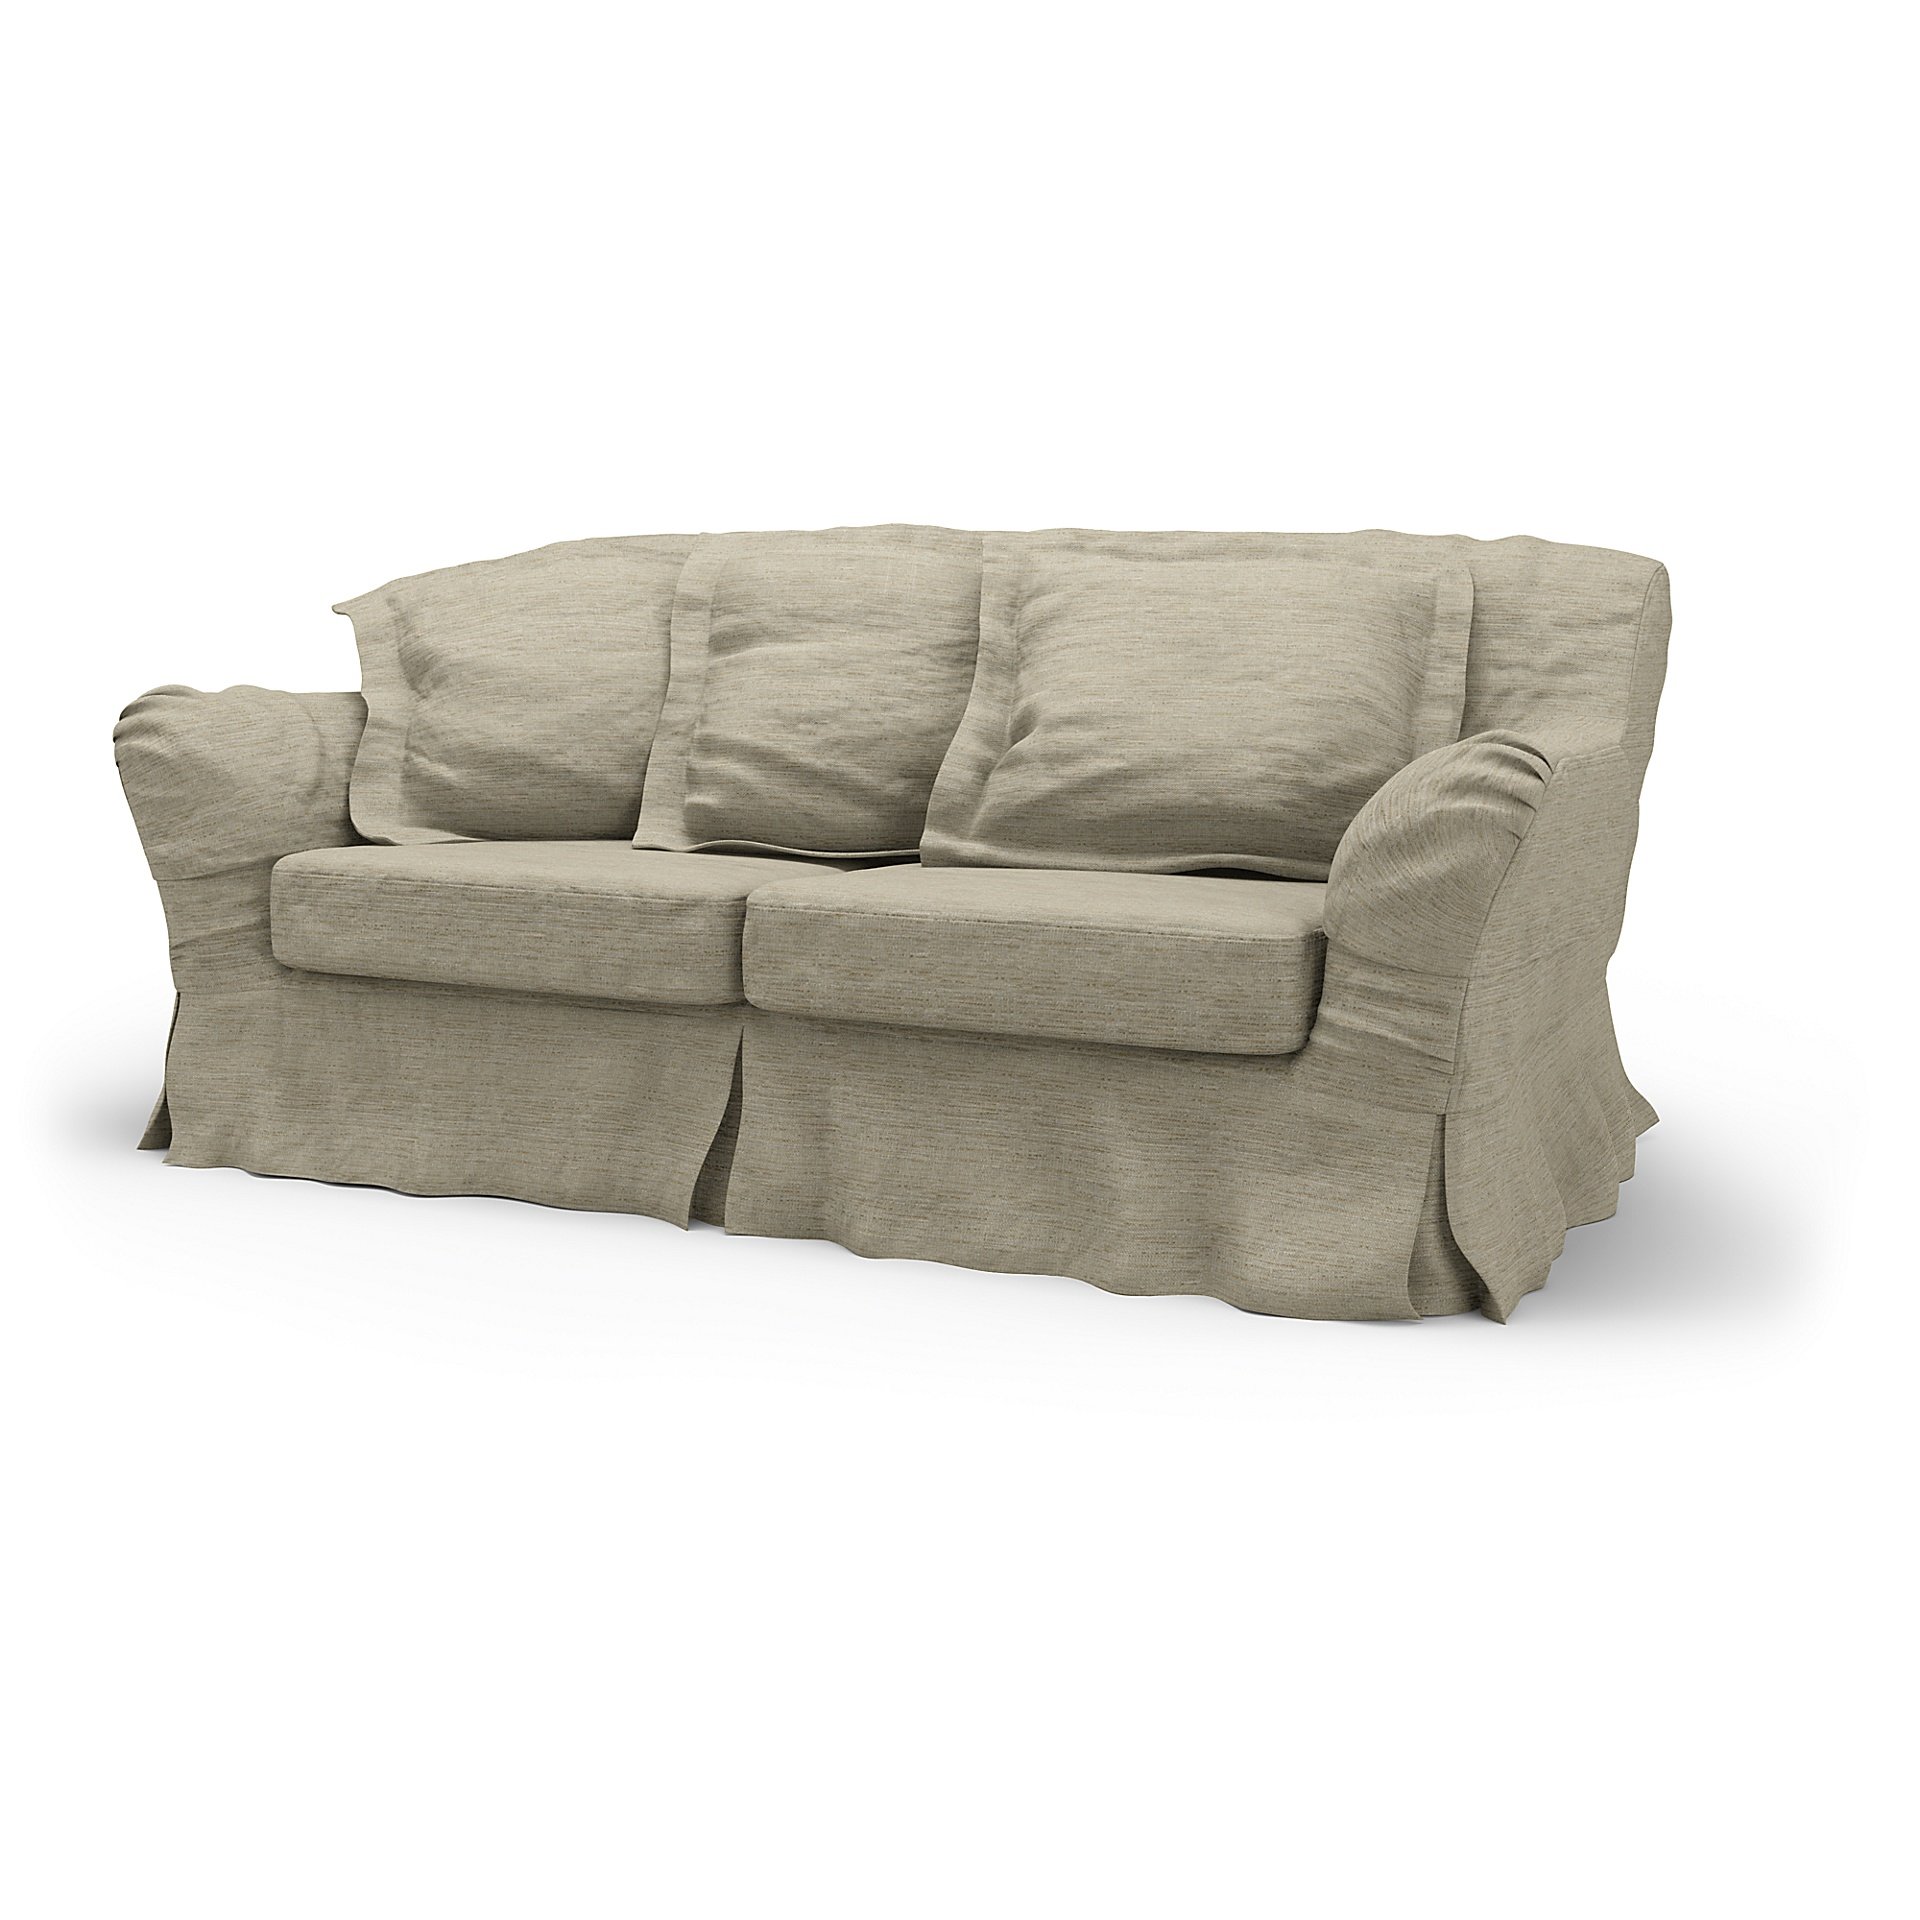 IKEA - Tomelilla 2 Seater Sofa Cover, Light Sand, Boucle & Texture - Bemz